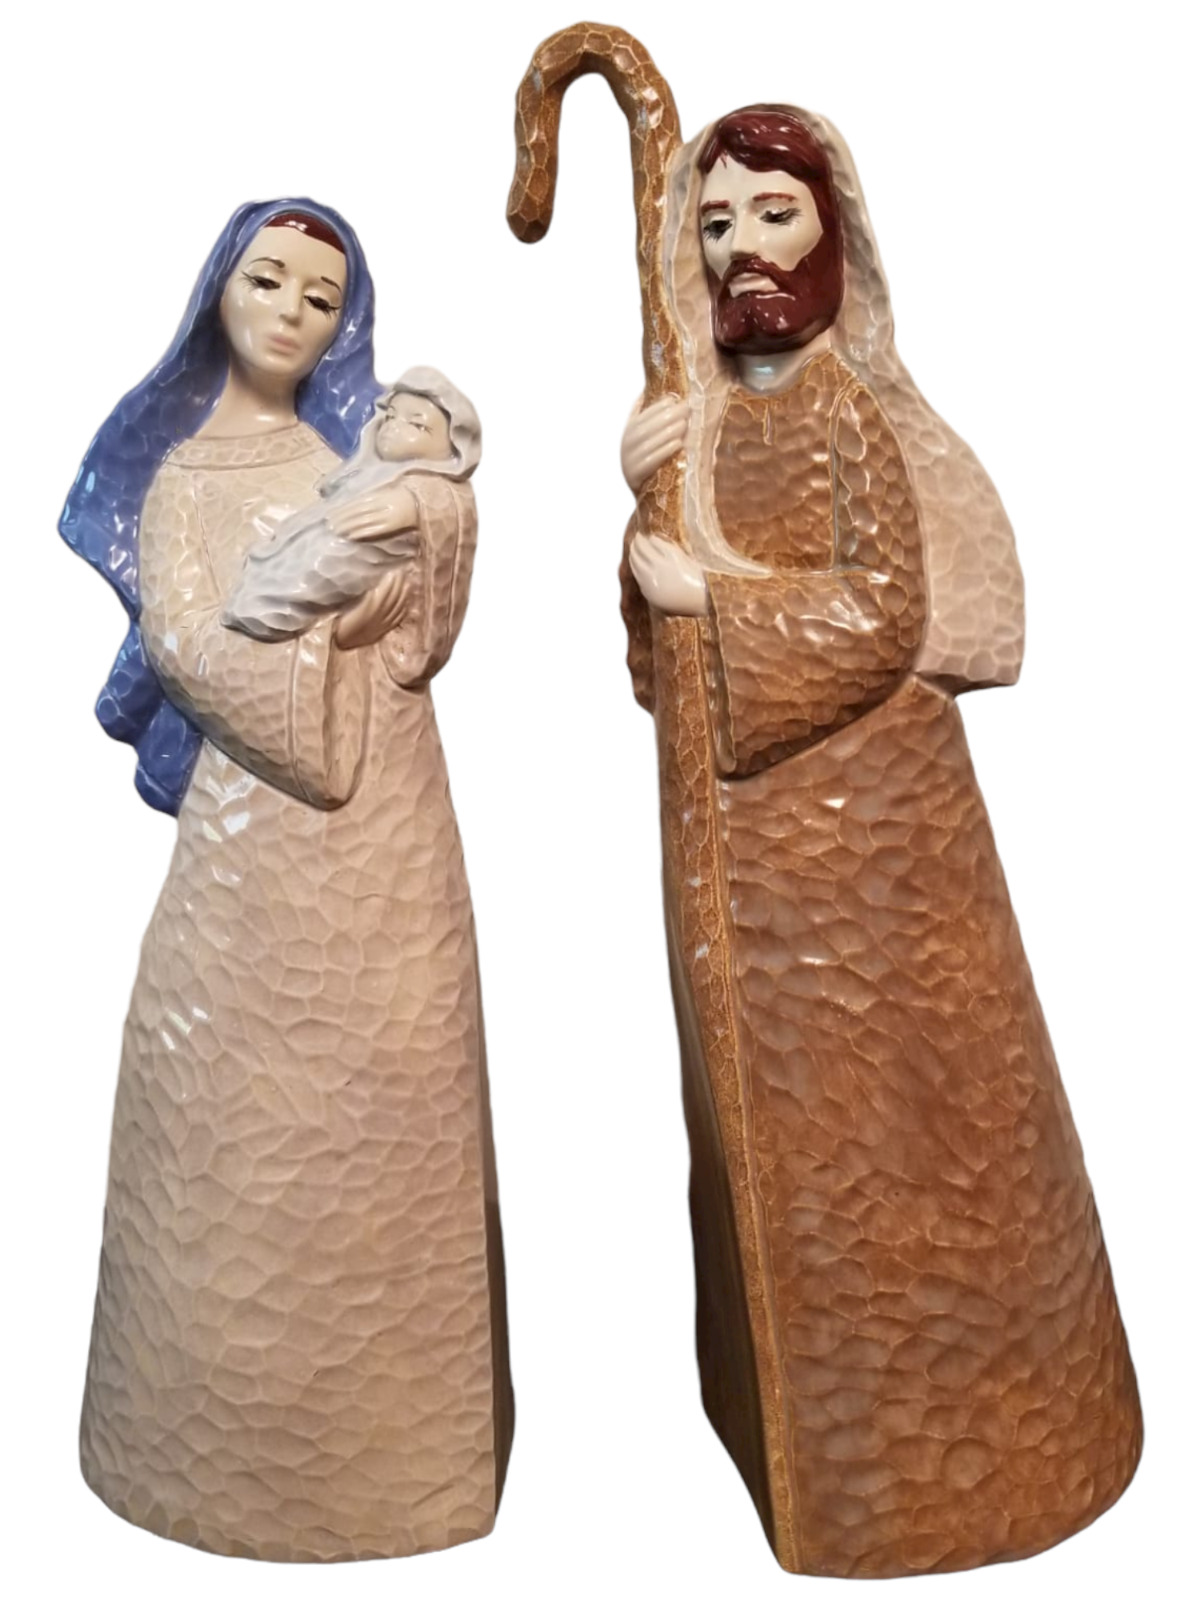 Beautiful Figurine Manger/Nativity Joseph Mary & Jesus sculpture Christmas